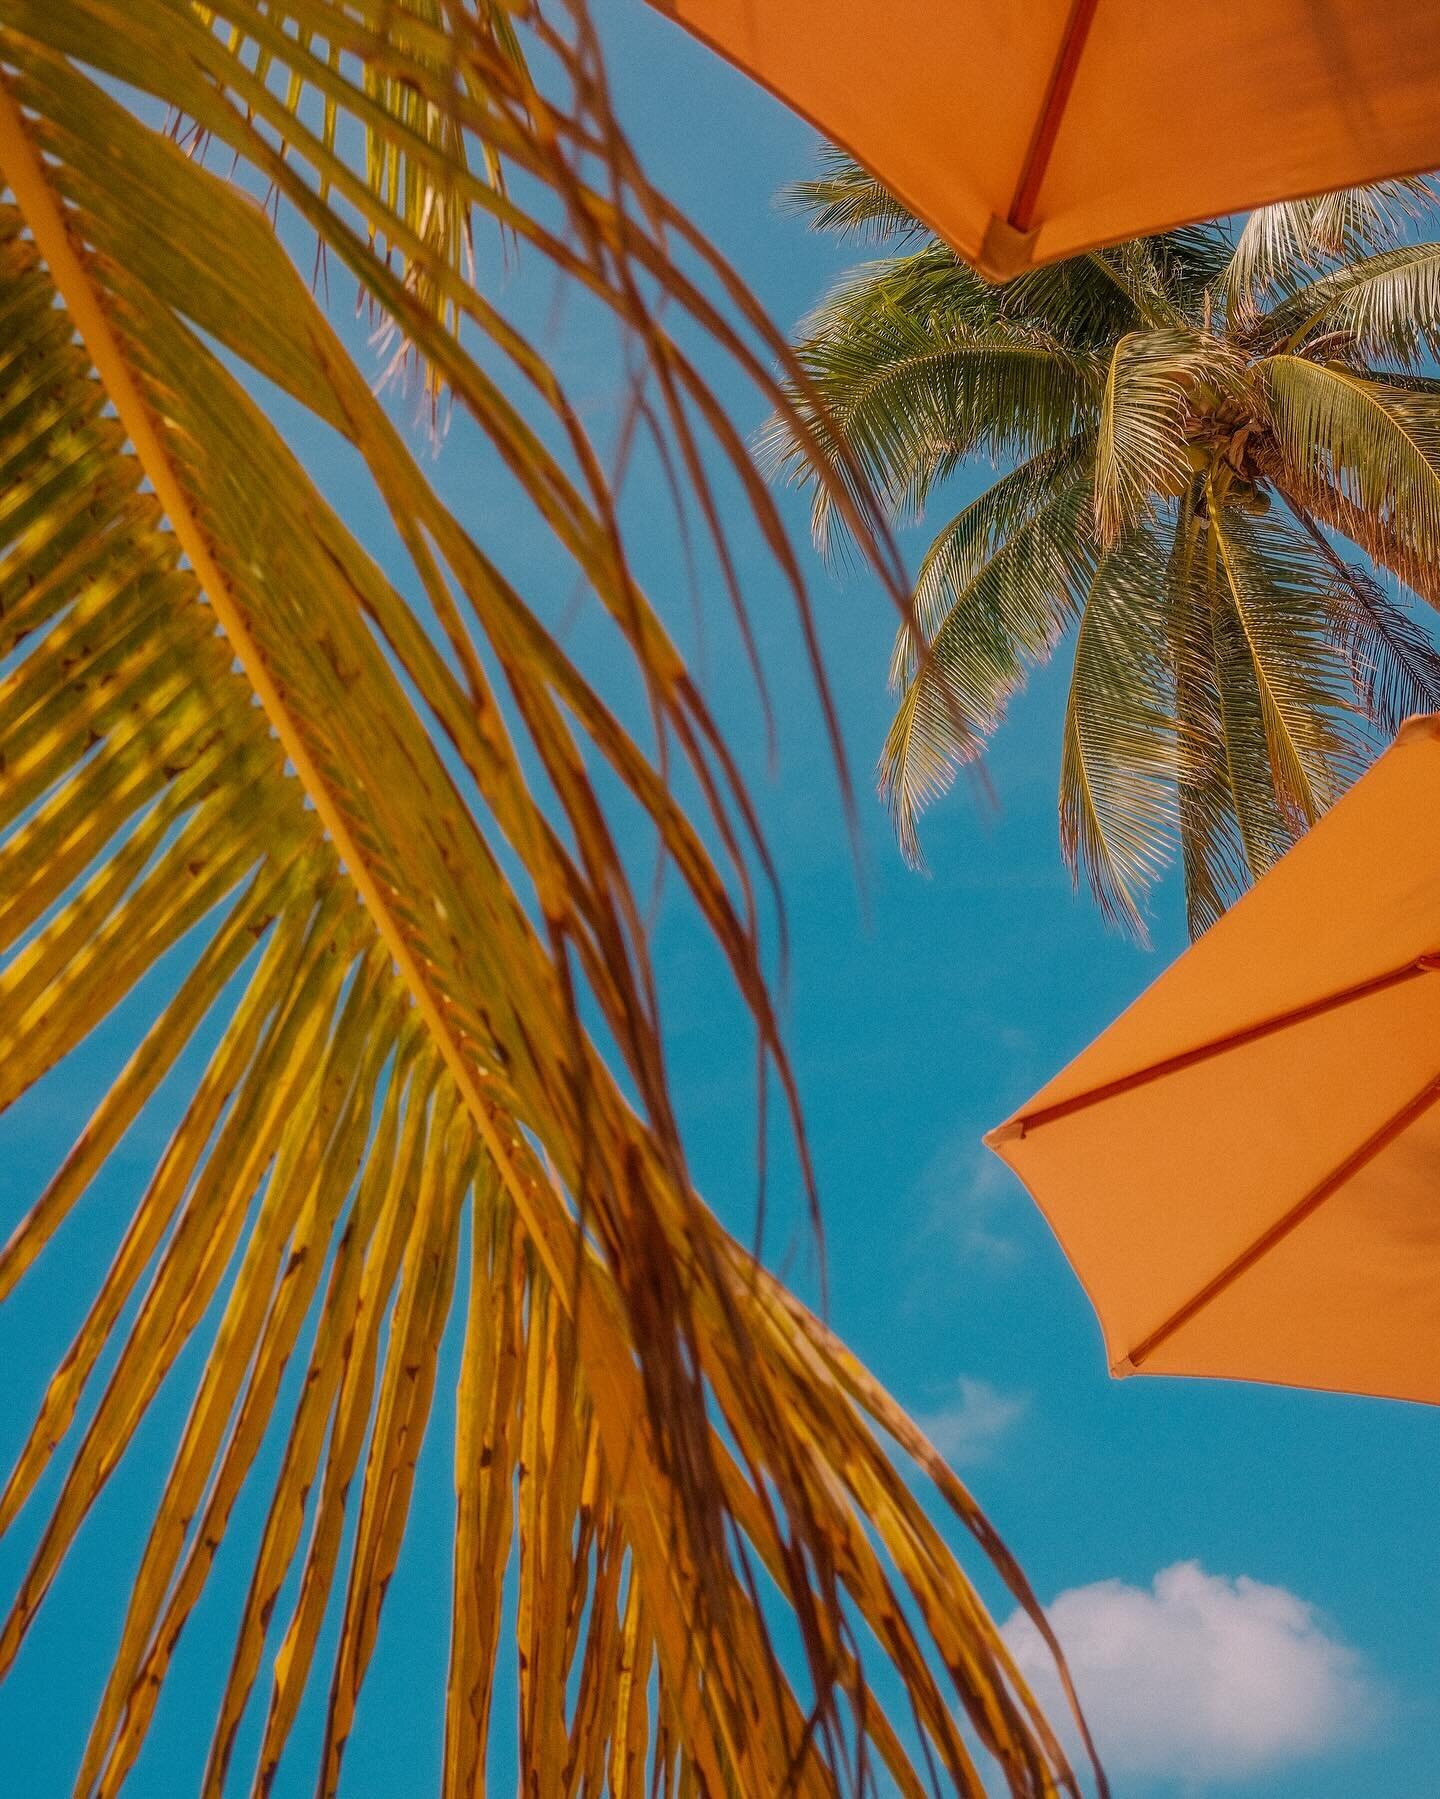 ⛱️☀️🌴🍹.
.
.
.

#mexico🇲🇽 #fujifilm_xseries #fujifilm #fujixseries #fujifeed #fujifilmx100v #fujilovers #fujicolor #yucatan #photography #naturephotography #palmtrees #bluesky #sunshine #umbrella #photographers #lightroom #lightroomphotography